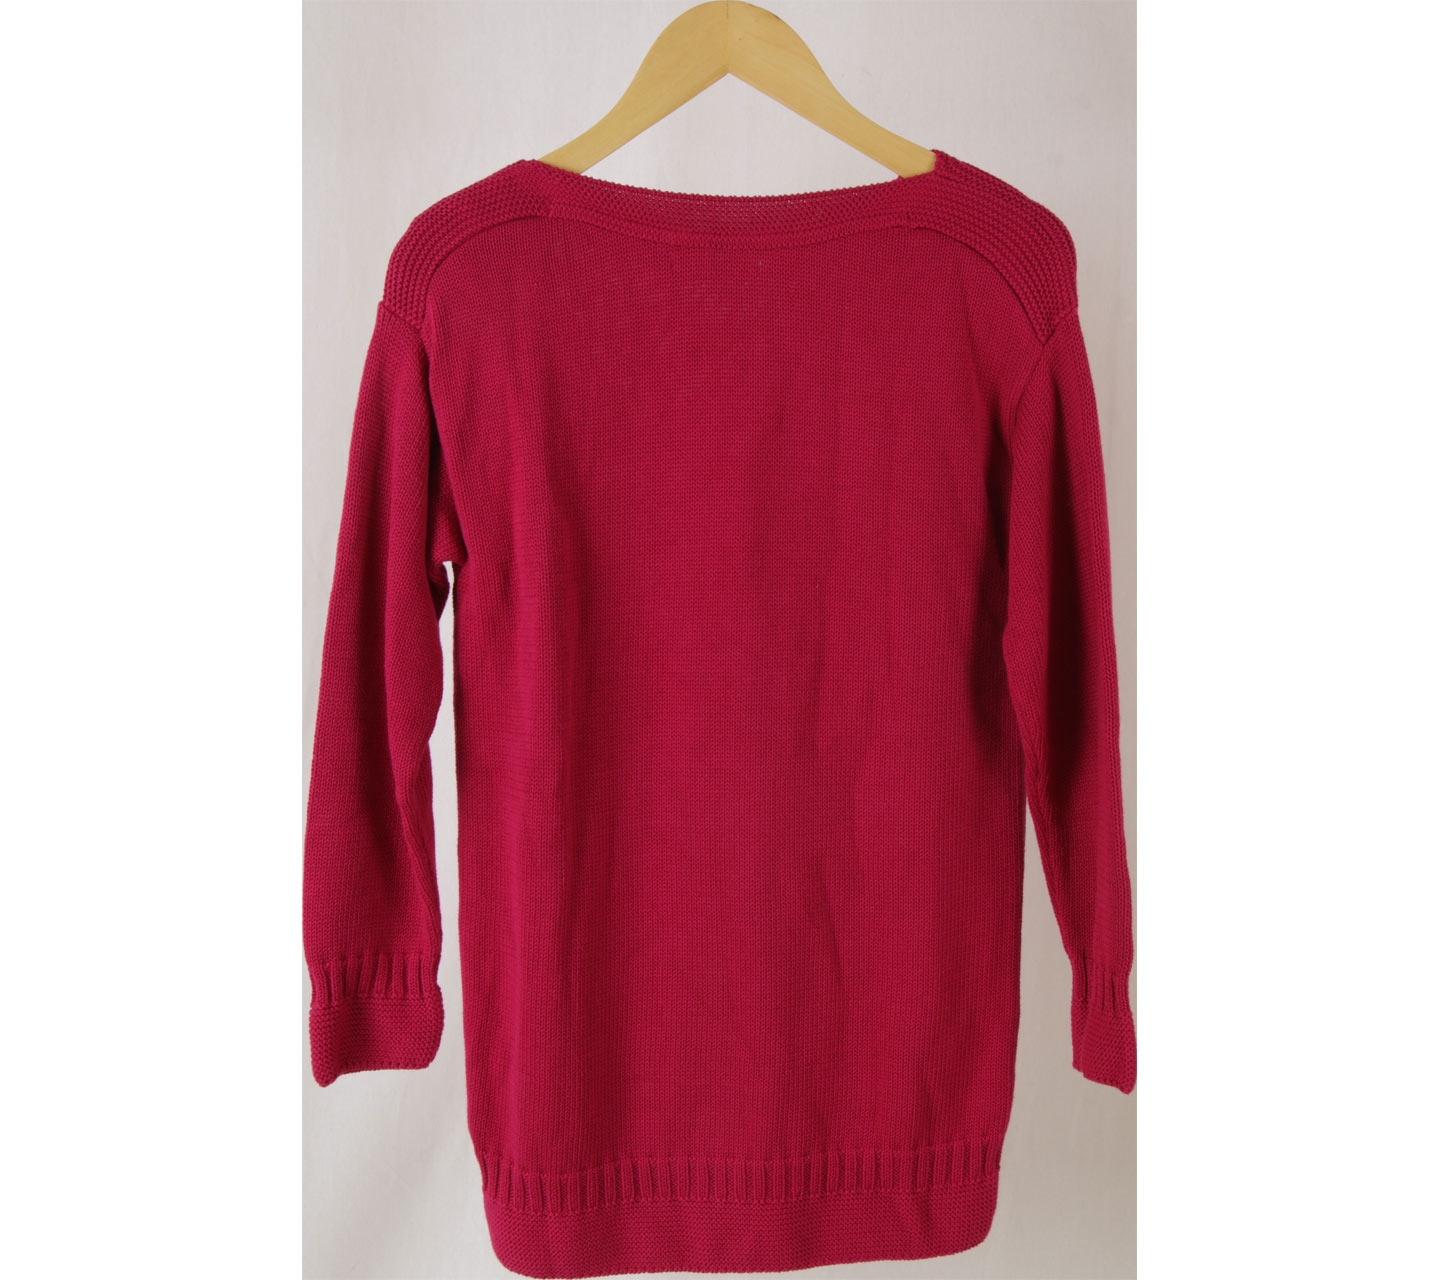 Marks & Spencer Pink Knit Sweater